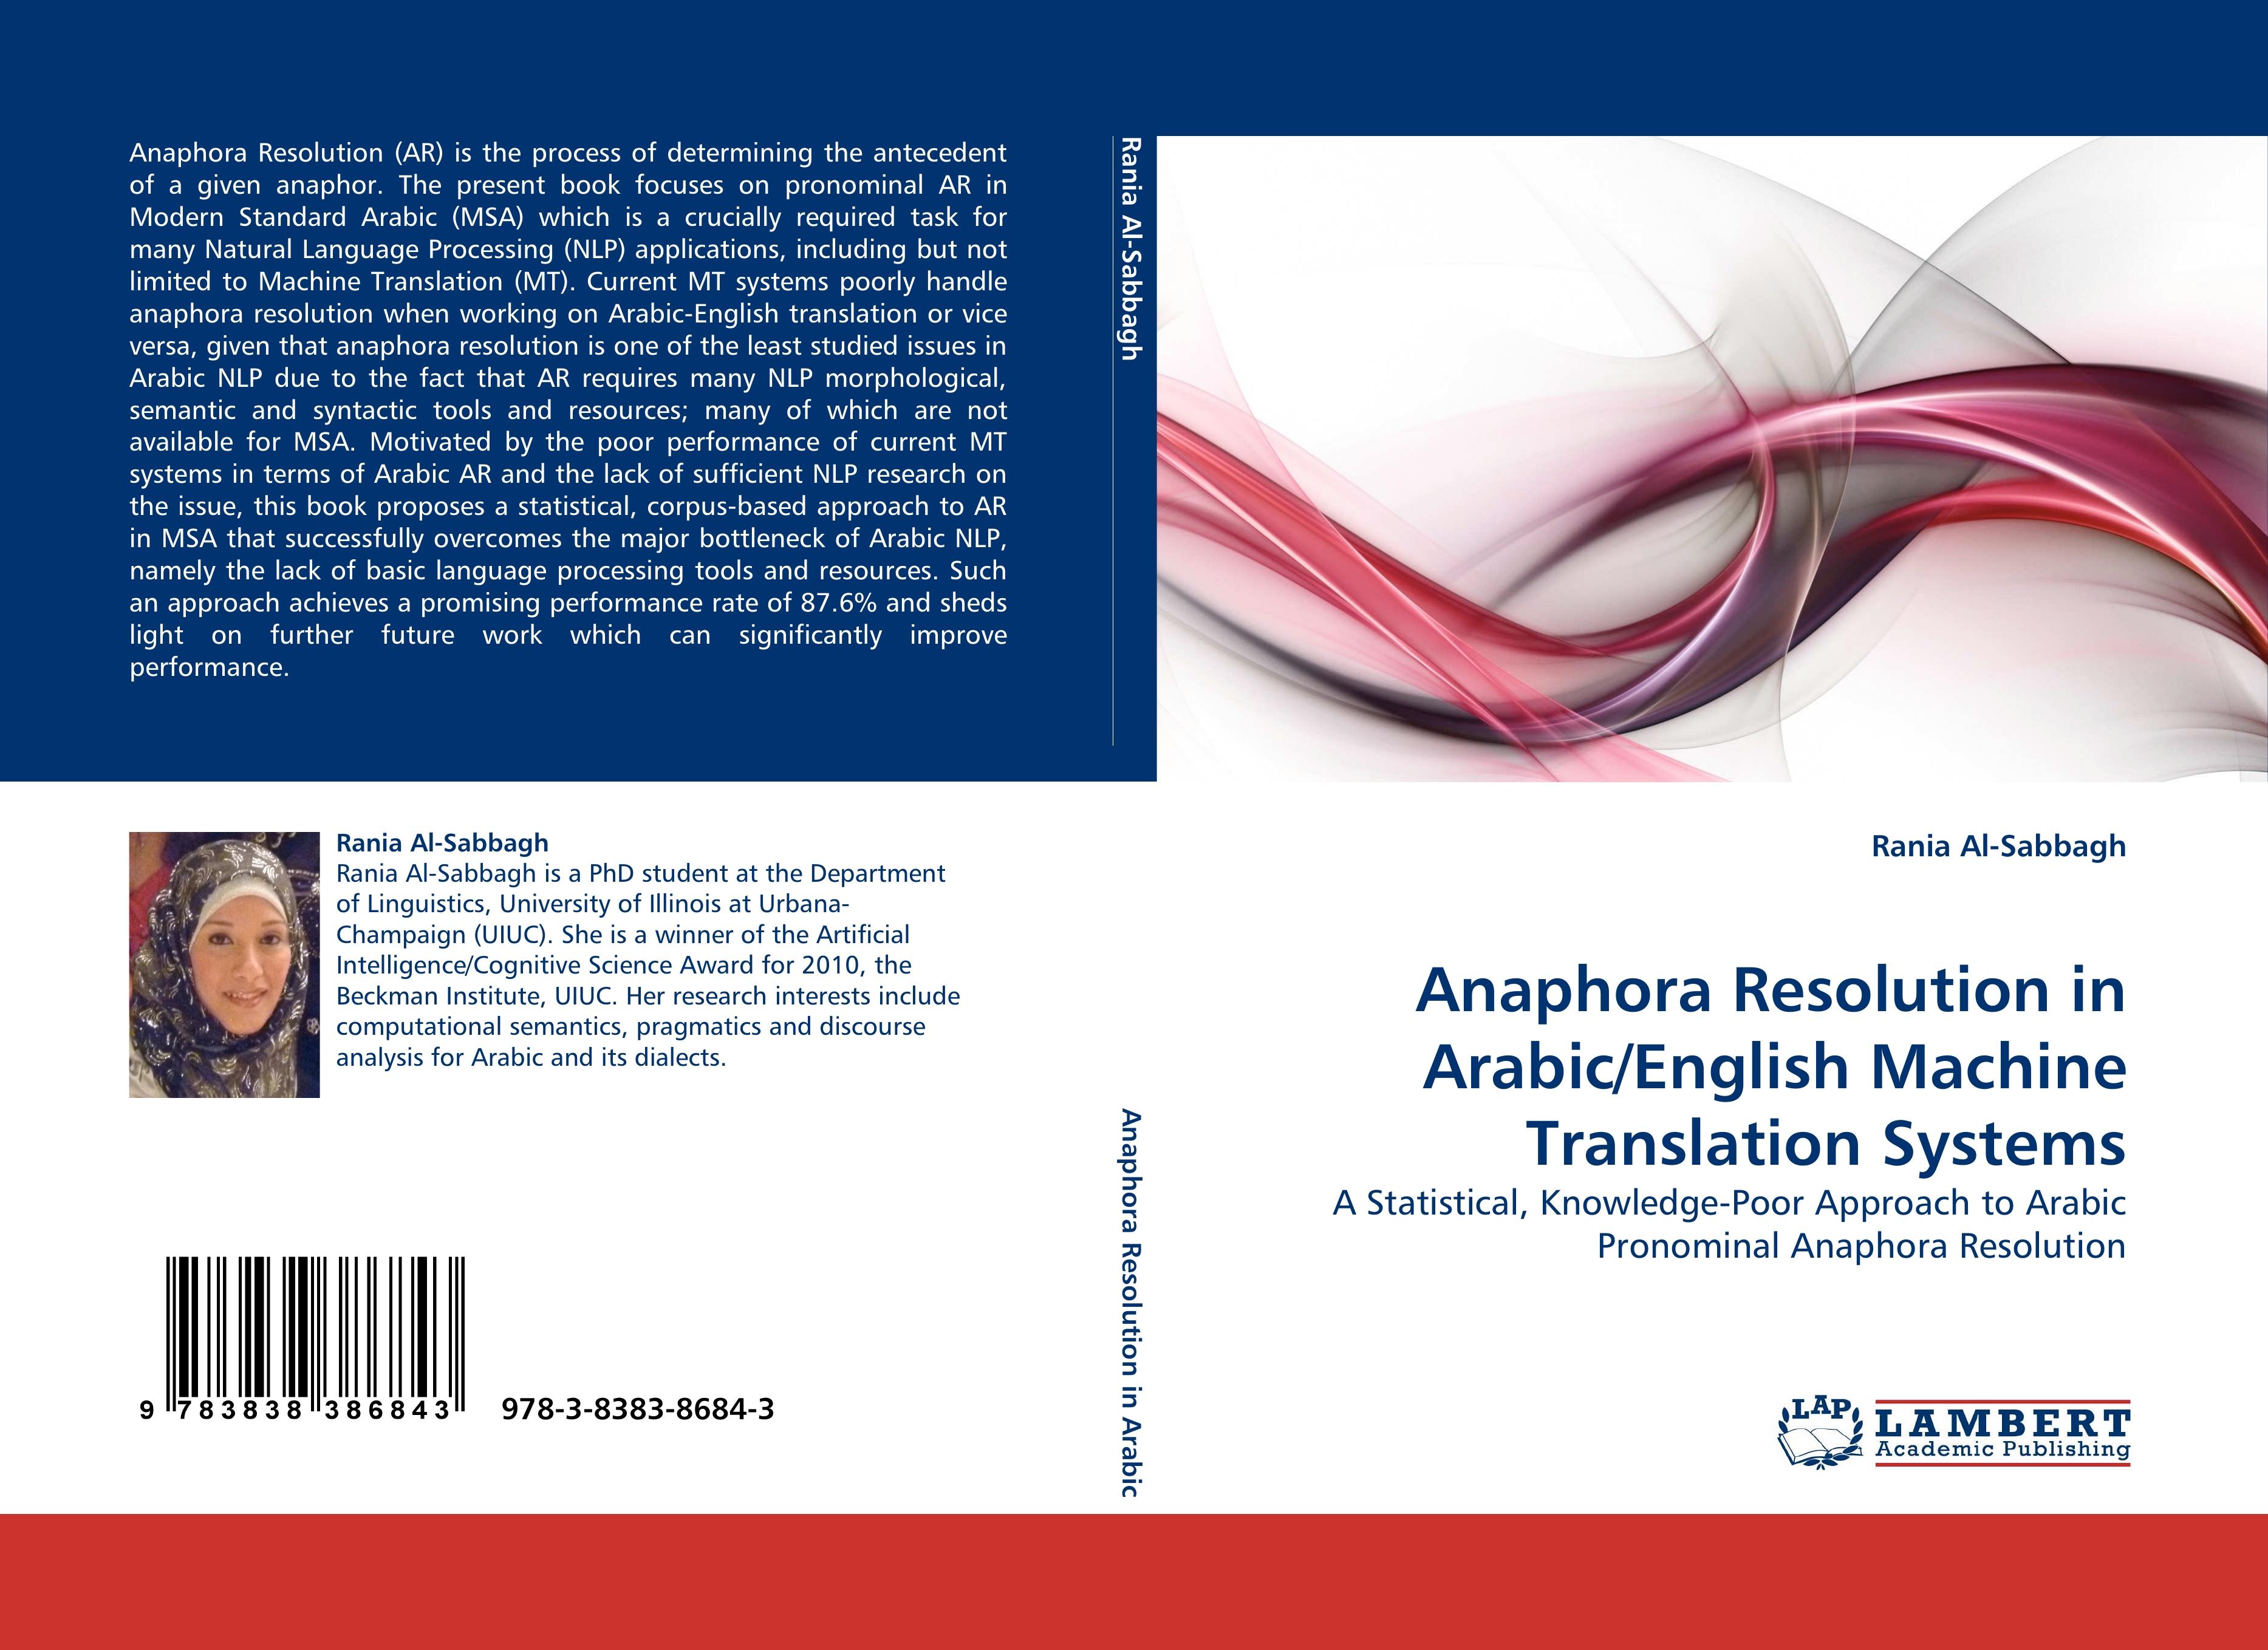 Anaphora Resolution in Arabic/English Machine Translation Systems - Rania Al-Sabbagh